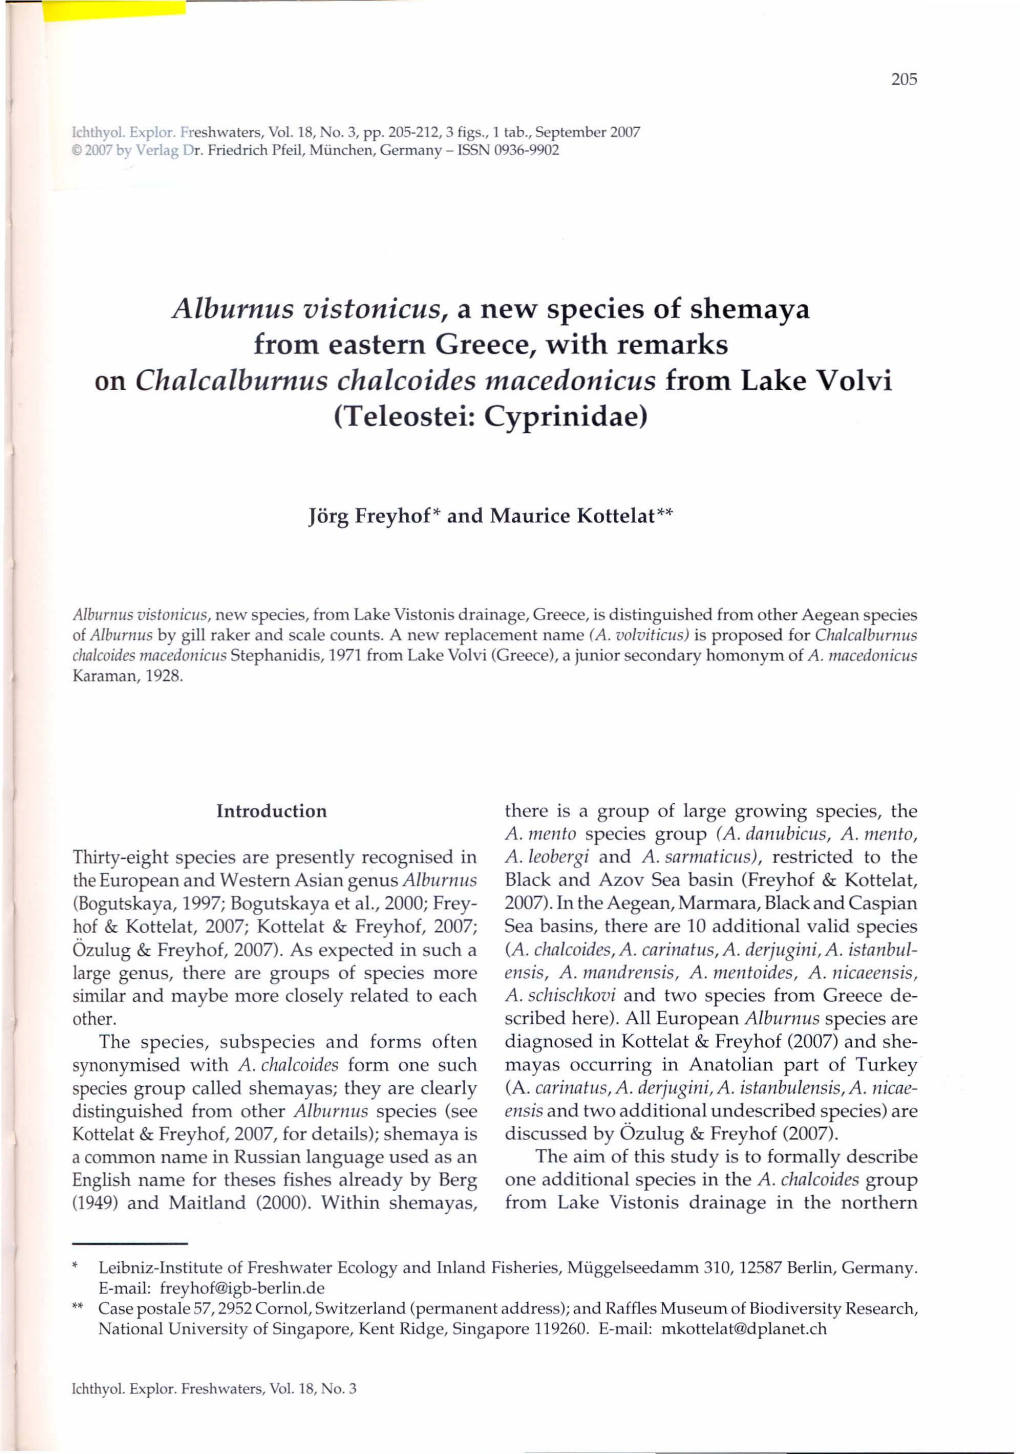 On Chalcalburnus Chalcoides Macedonicus from Lake Volvi (Teleostei: Cyprinidae)